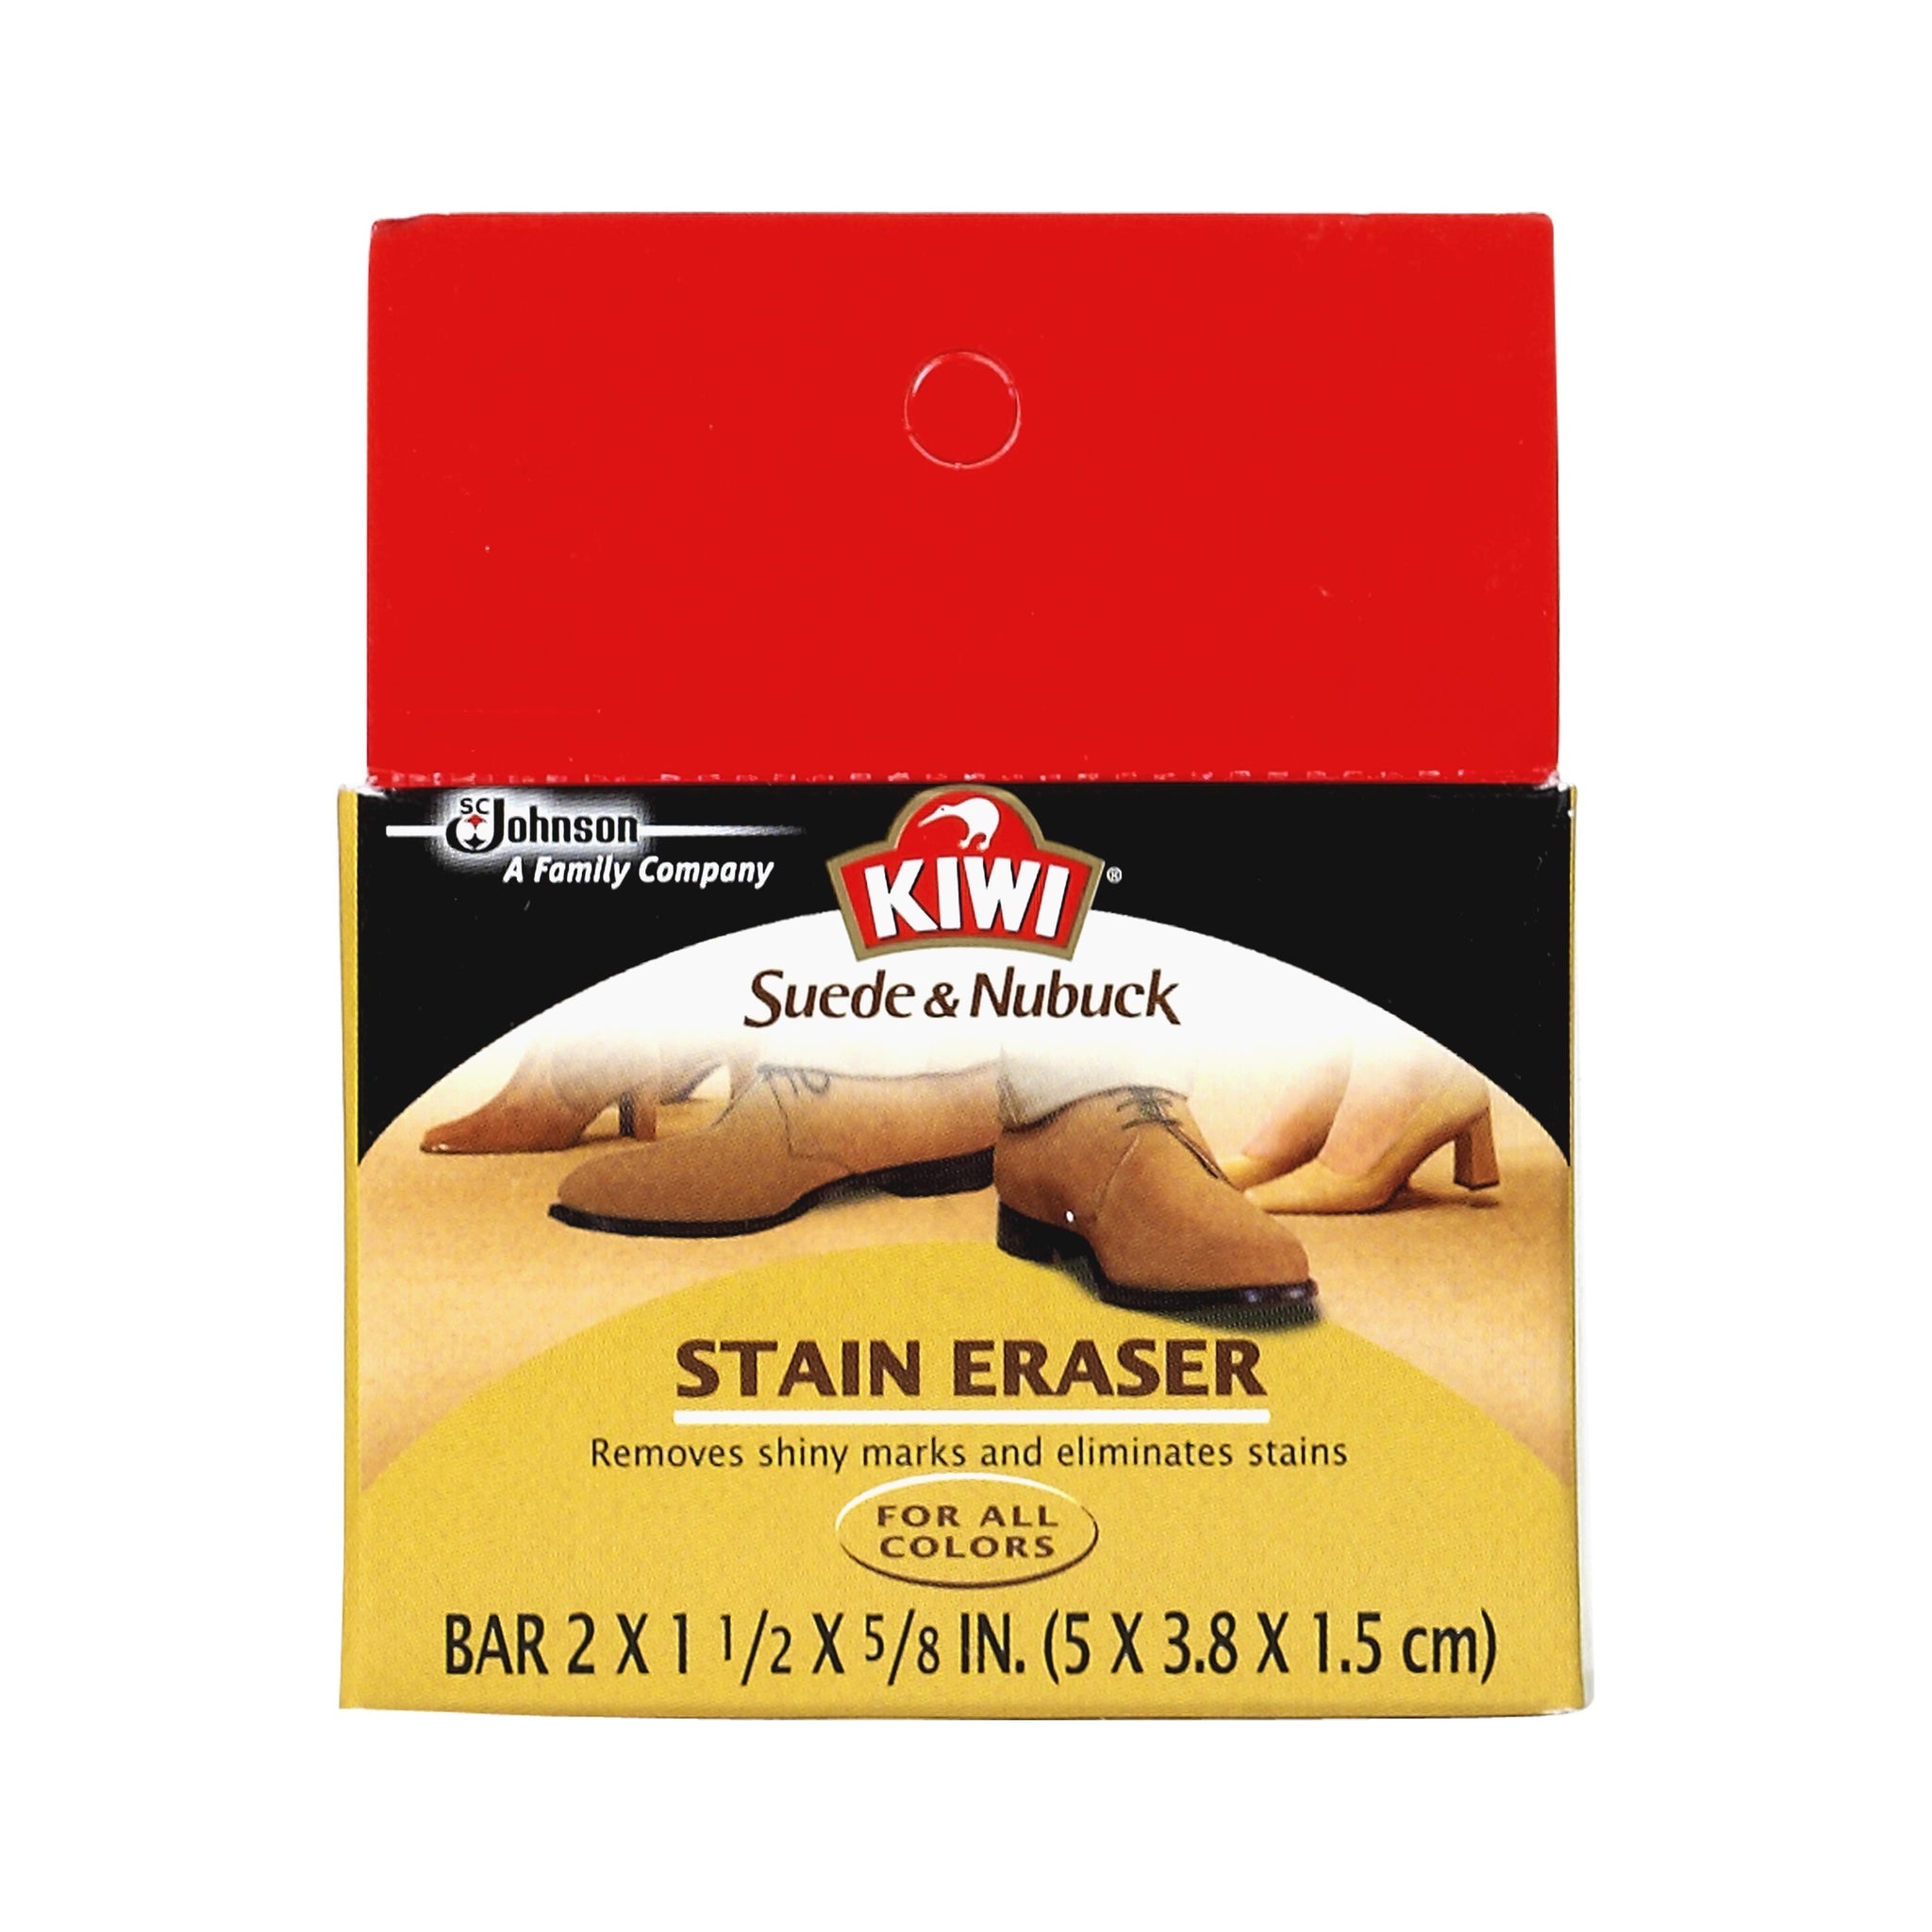 Kiwi Suede and Nubuck Stain Eraser